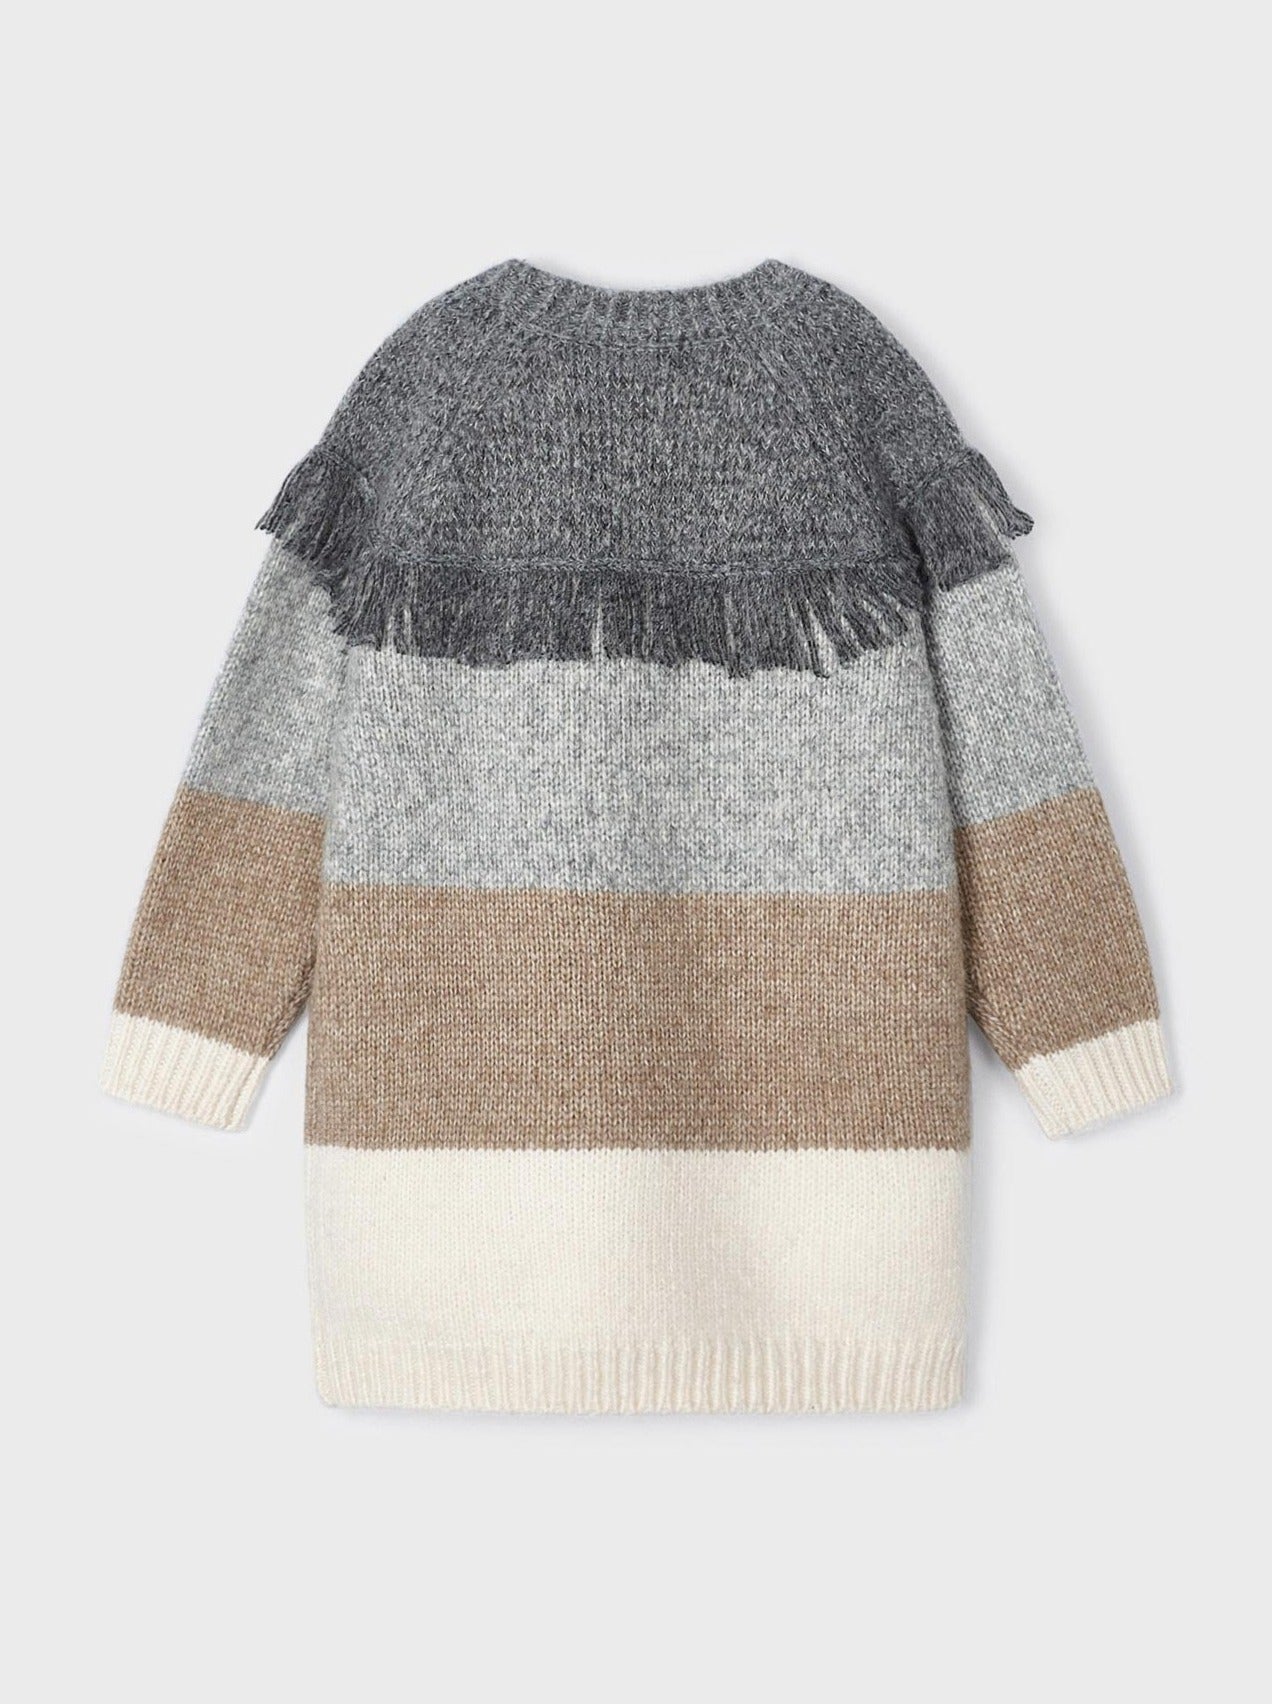 Mayoral Mini Grey & Beige Striped Knit Sweater Dress _4926-91